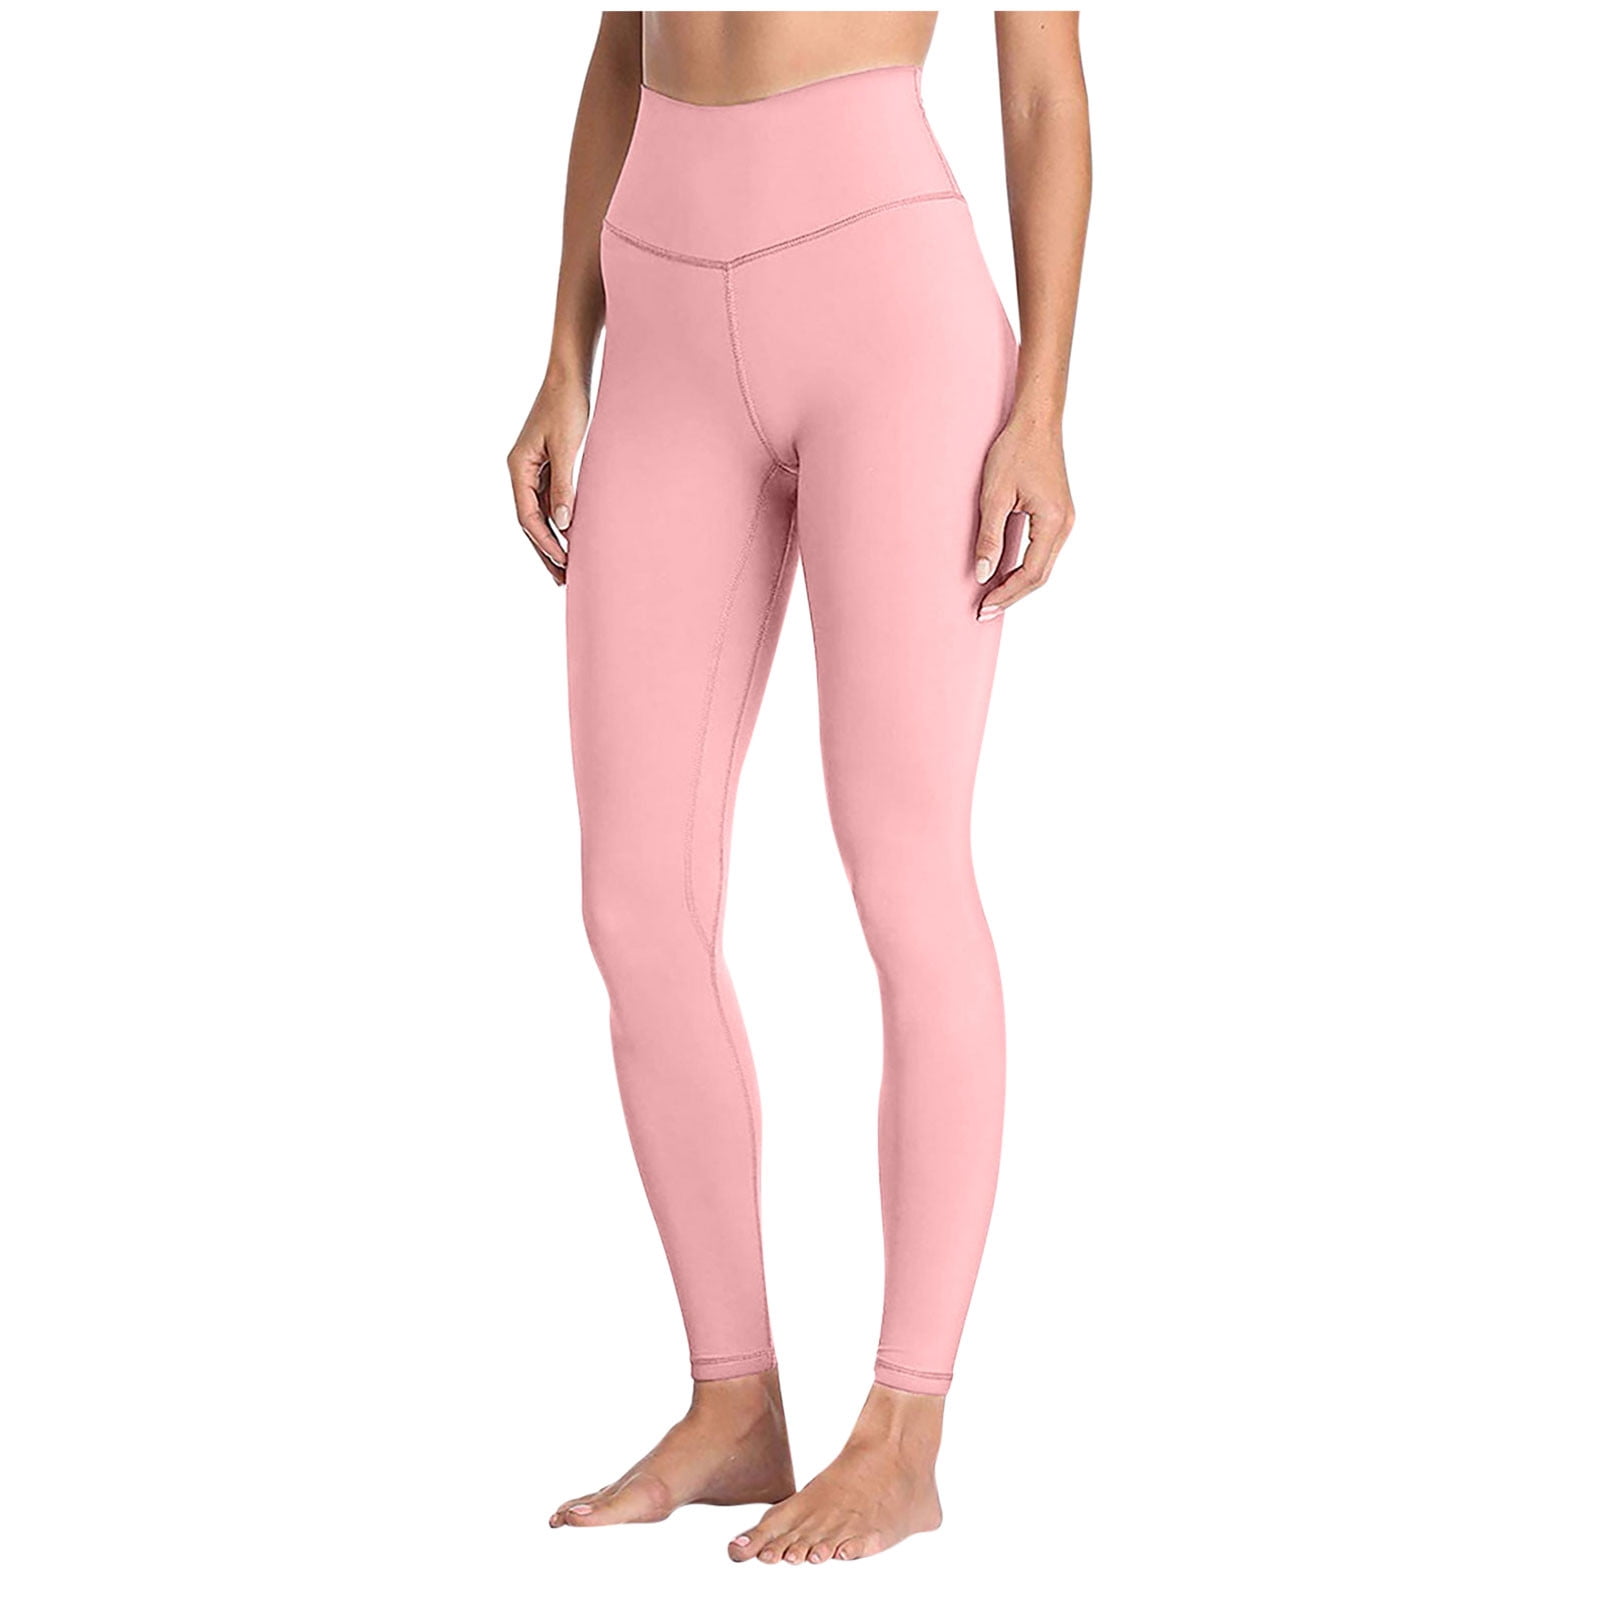 JSGEK Sales Women s High Waist Yoga Pants with Pockets Hip Lift Quick drying Running Tummy Control Pants Workout Leggings Pink S 5032e547 c856 49ca 9882 046f77ce9248.45484ed07f541b10b50ca3243bd0f36e